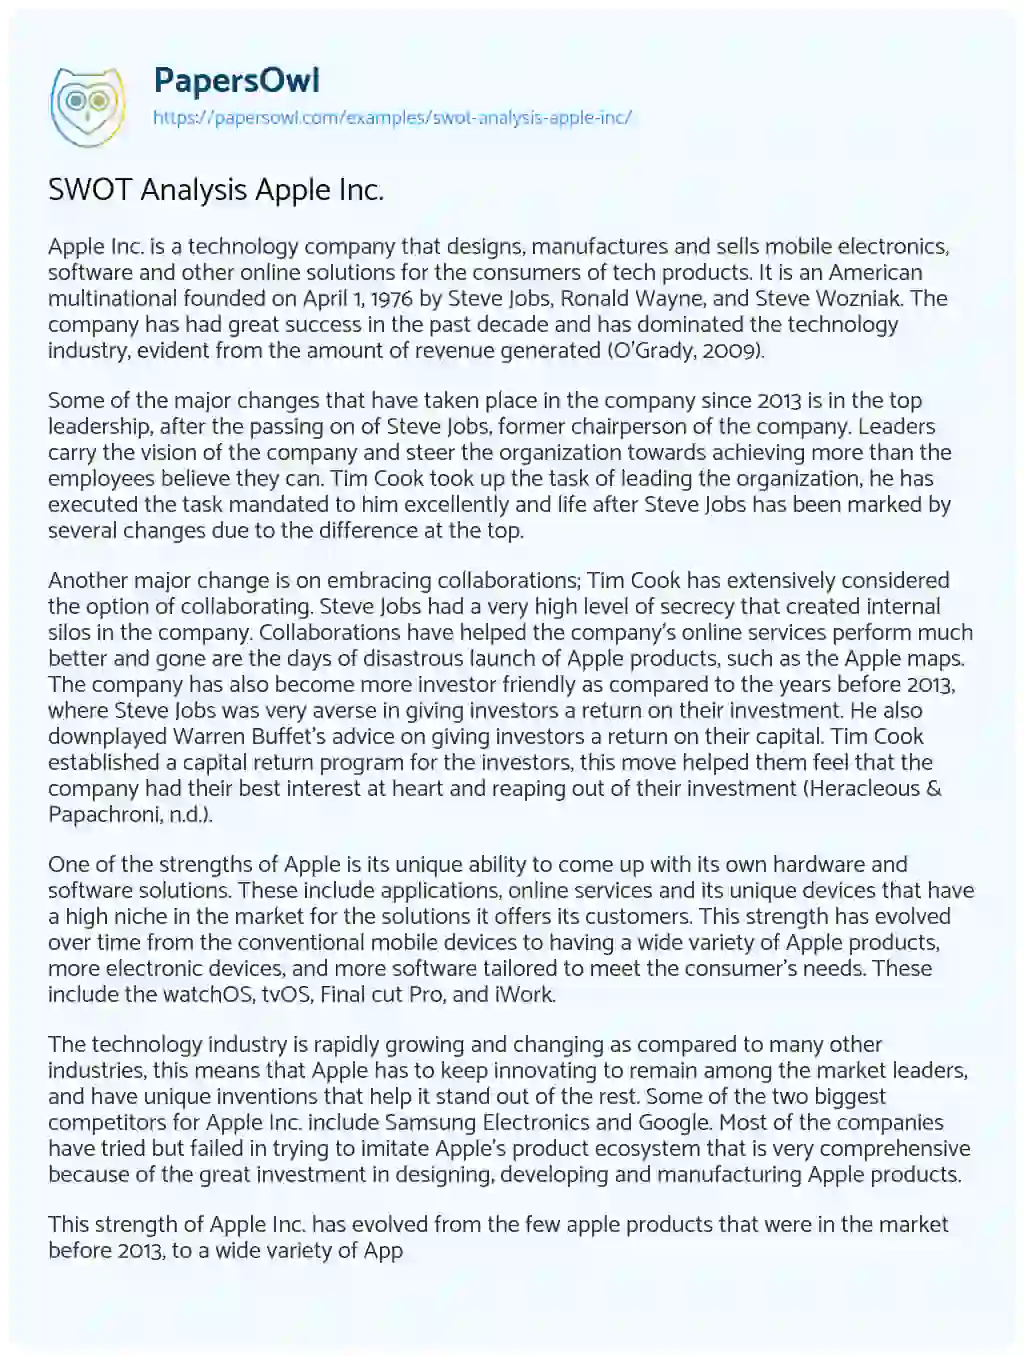 Essay on SWOT Analysis Apple Inc.